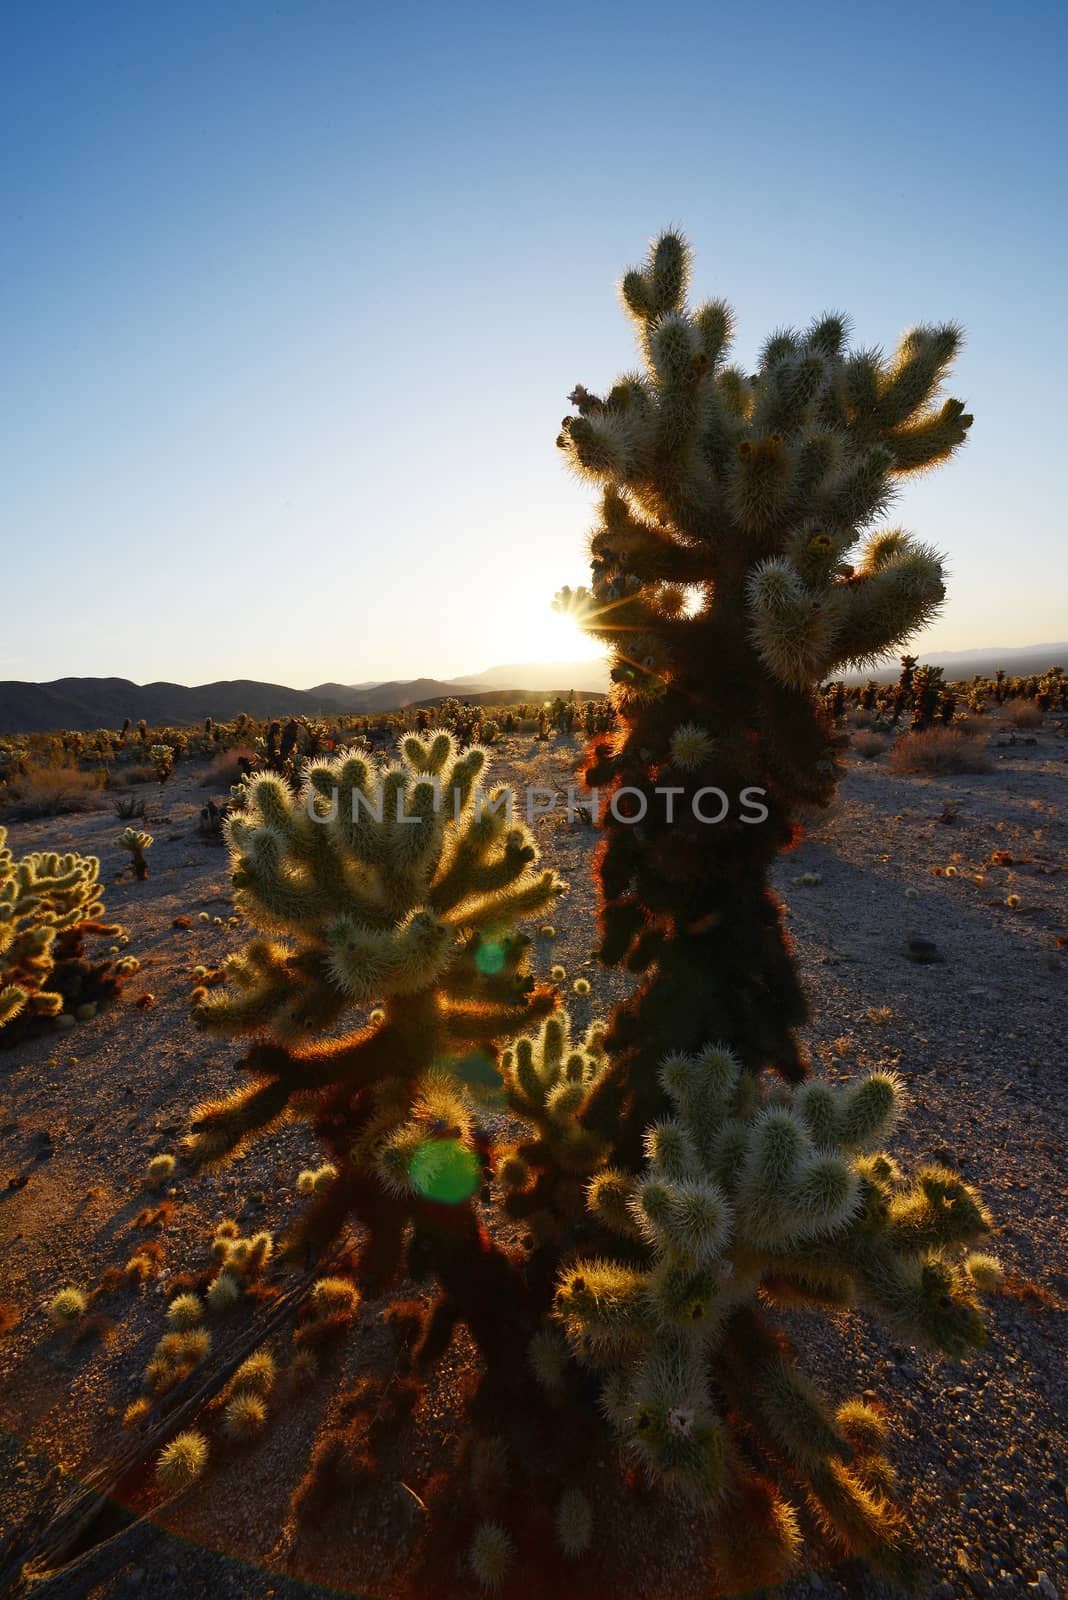 cholla cactus garden by porbital